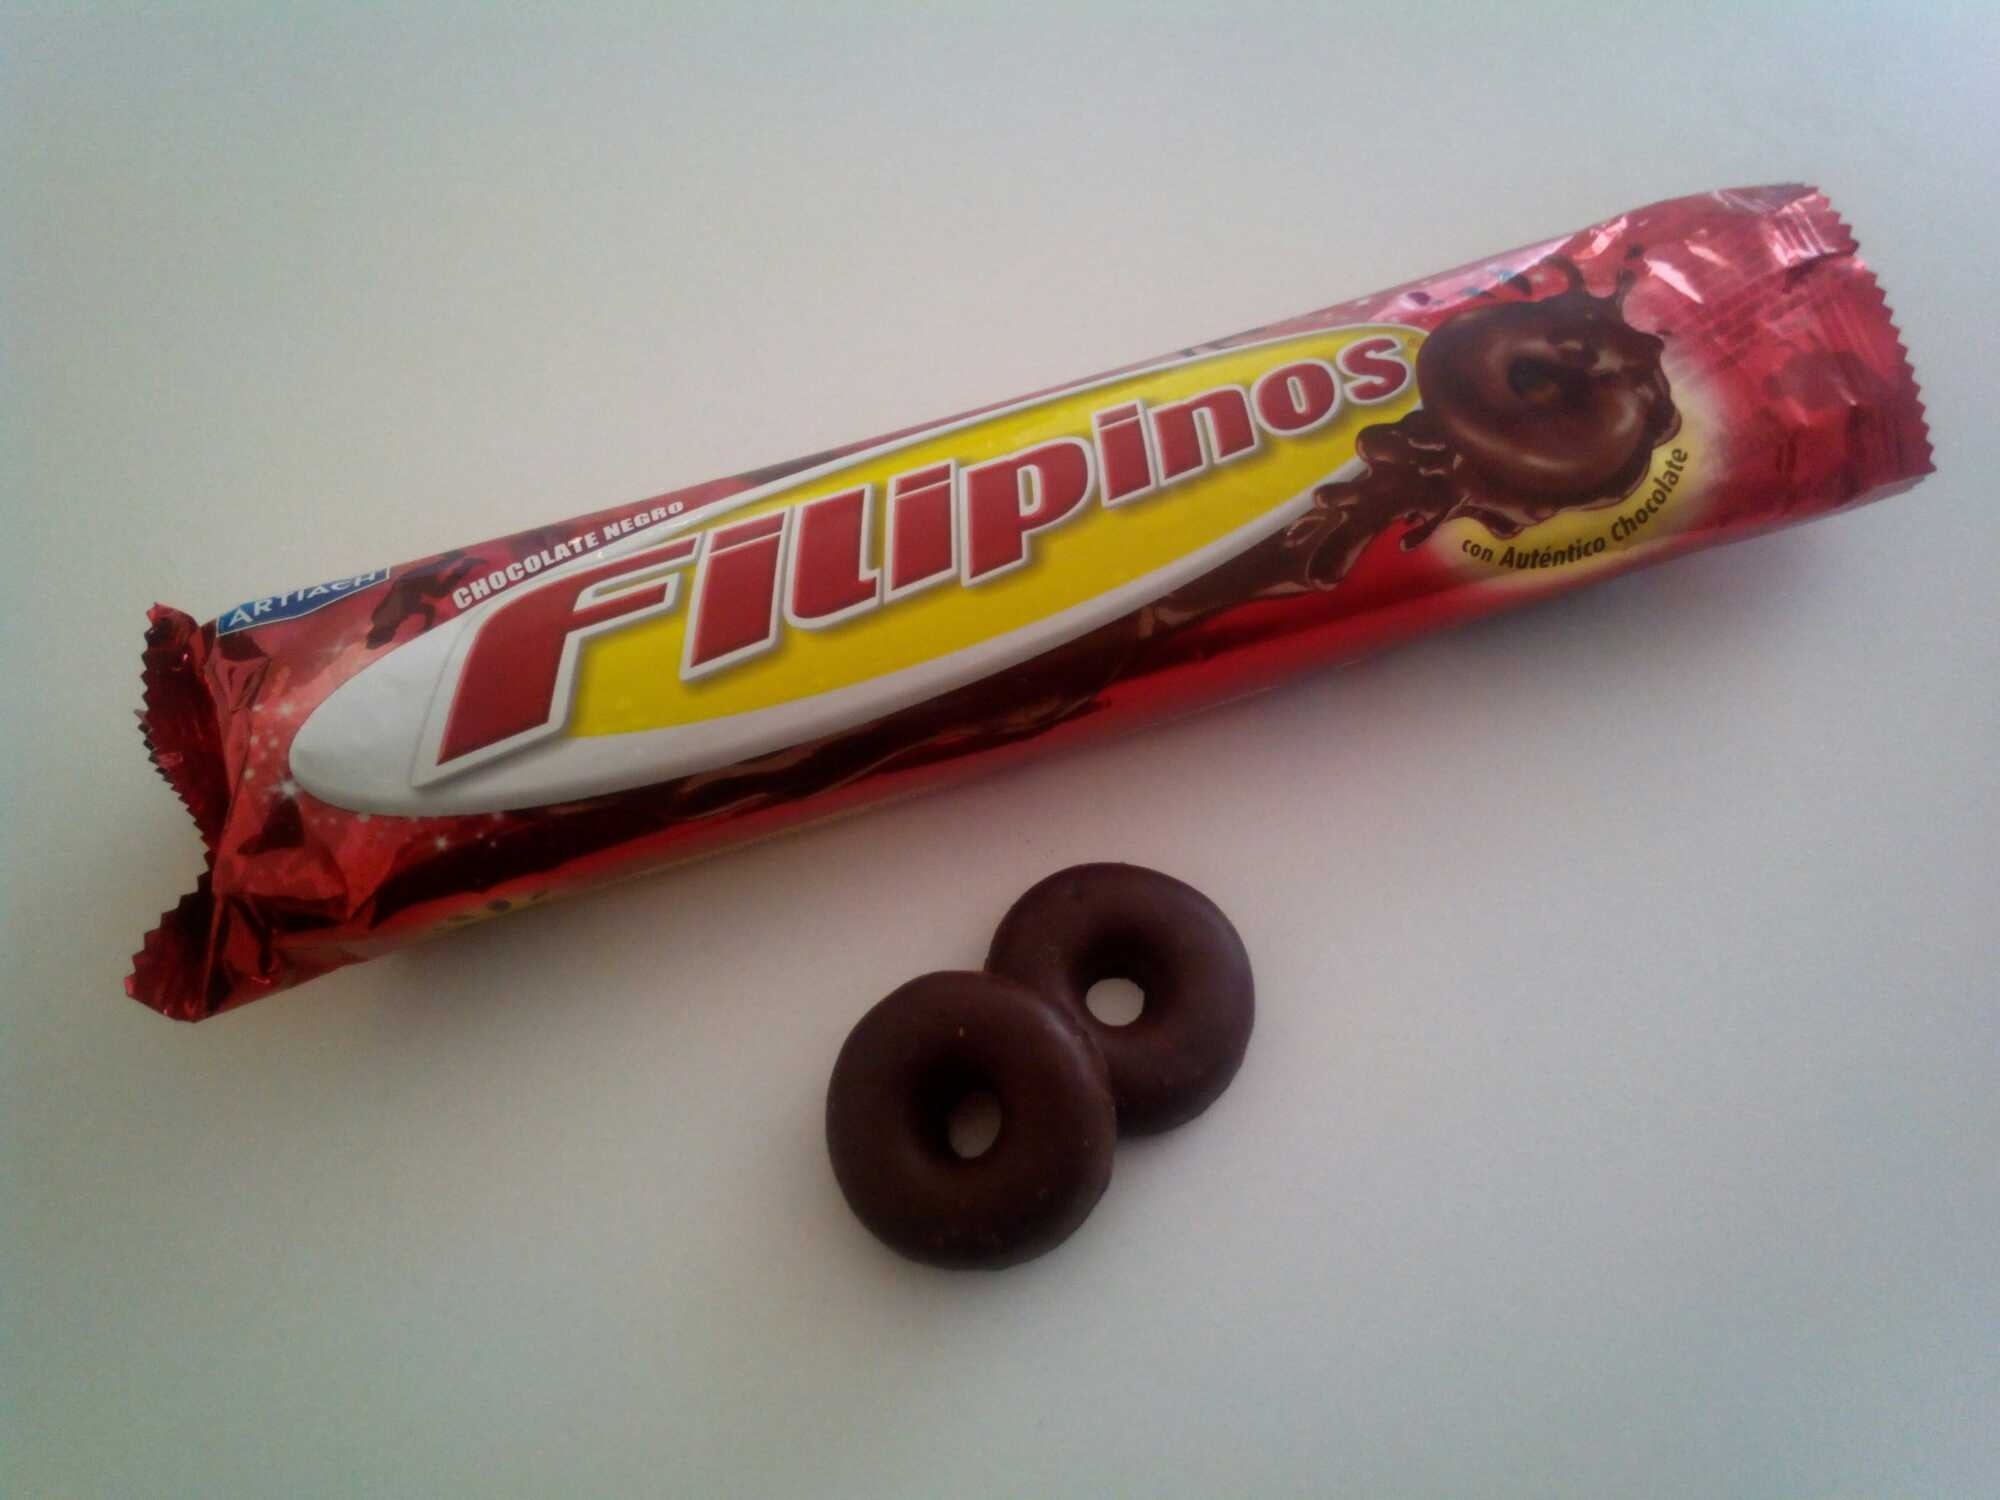 Filipinos chocolate negro - Produit - en